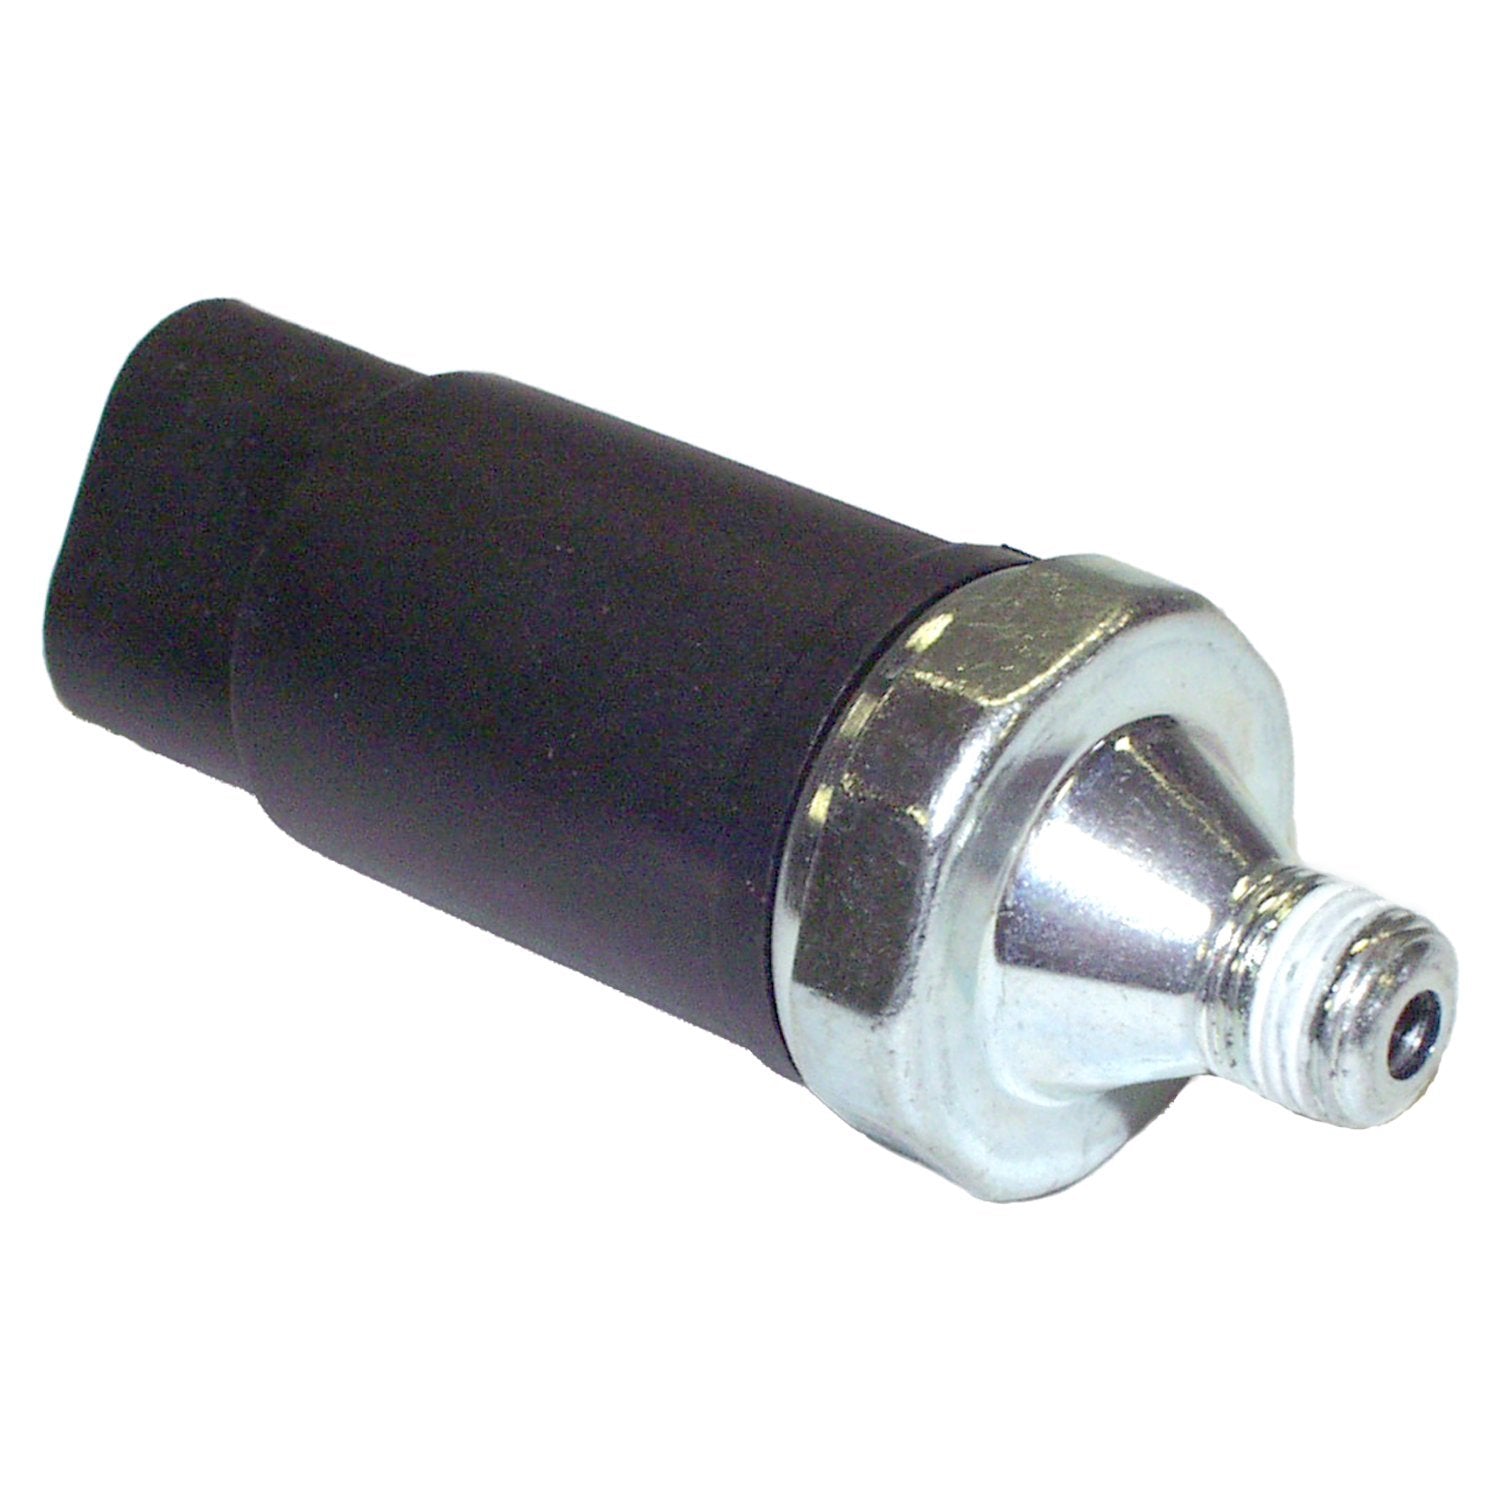 Oil Pressure Sending Unit, 1 Prong w/ Oval Plug-In